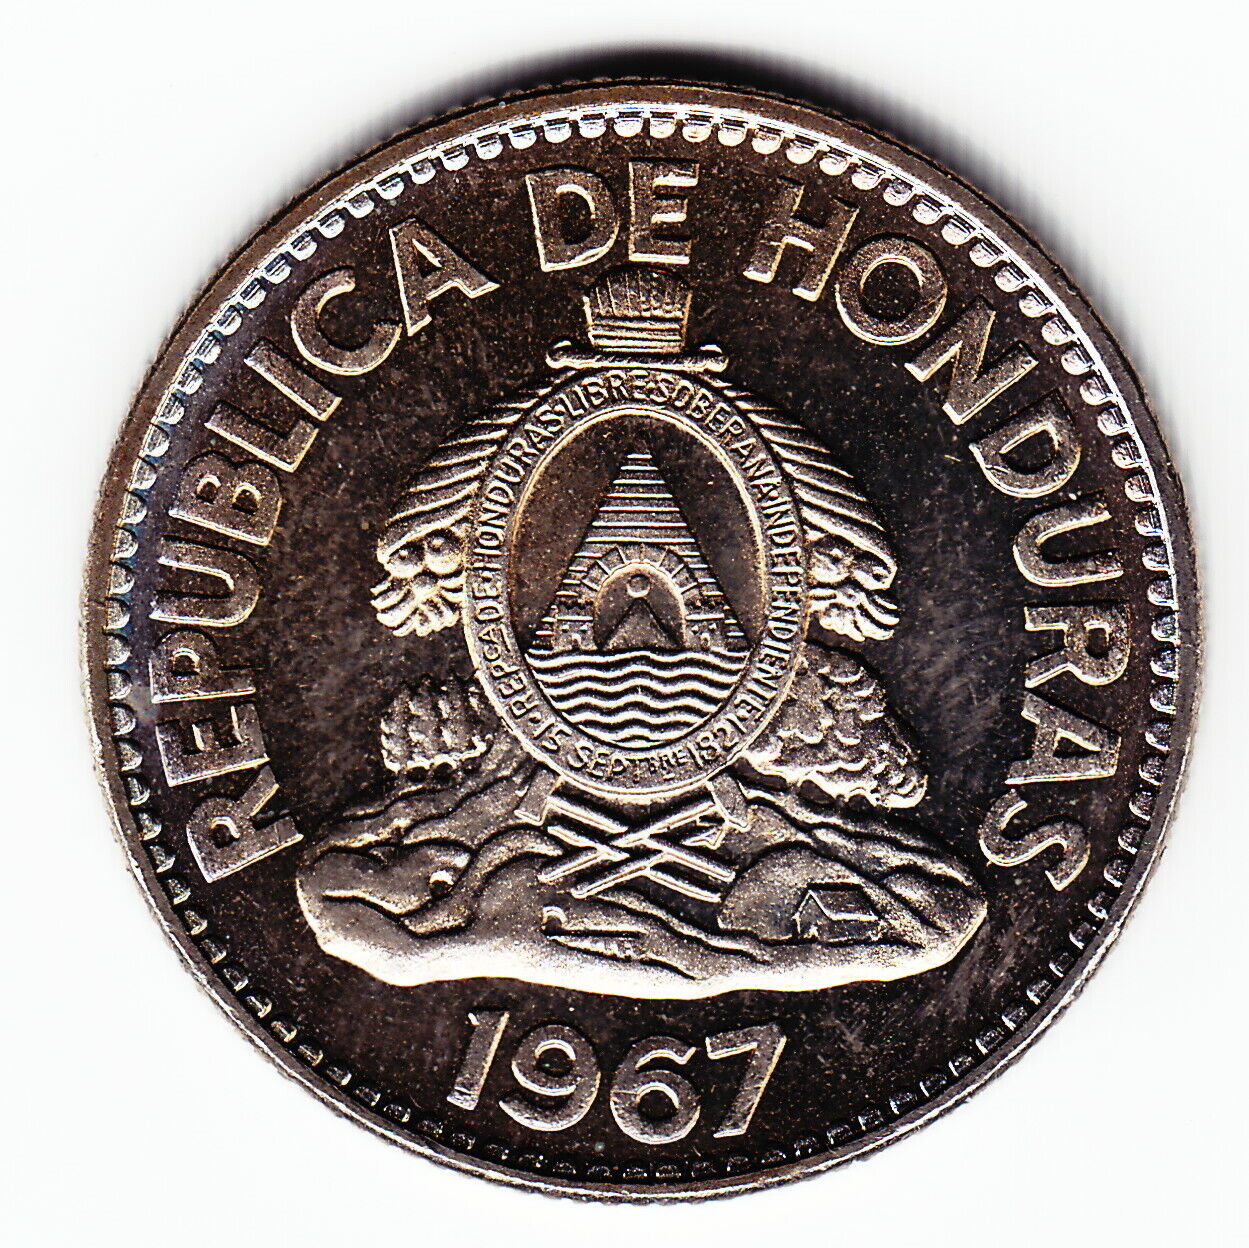 HONDURAS 50 centavos 1967 KM80 Copper-Nickel 1-year type VERY RARE in TOP GRADE!